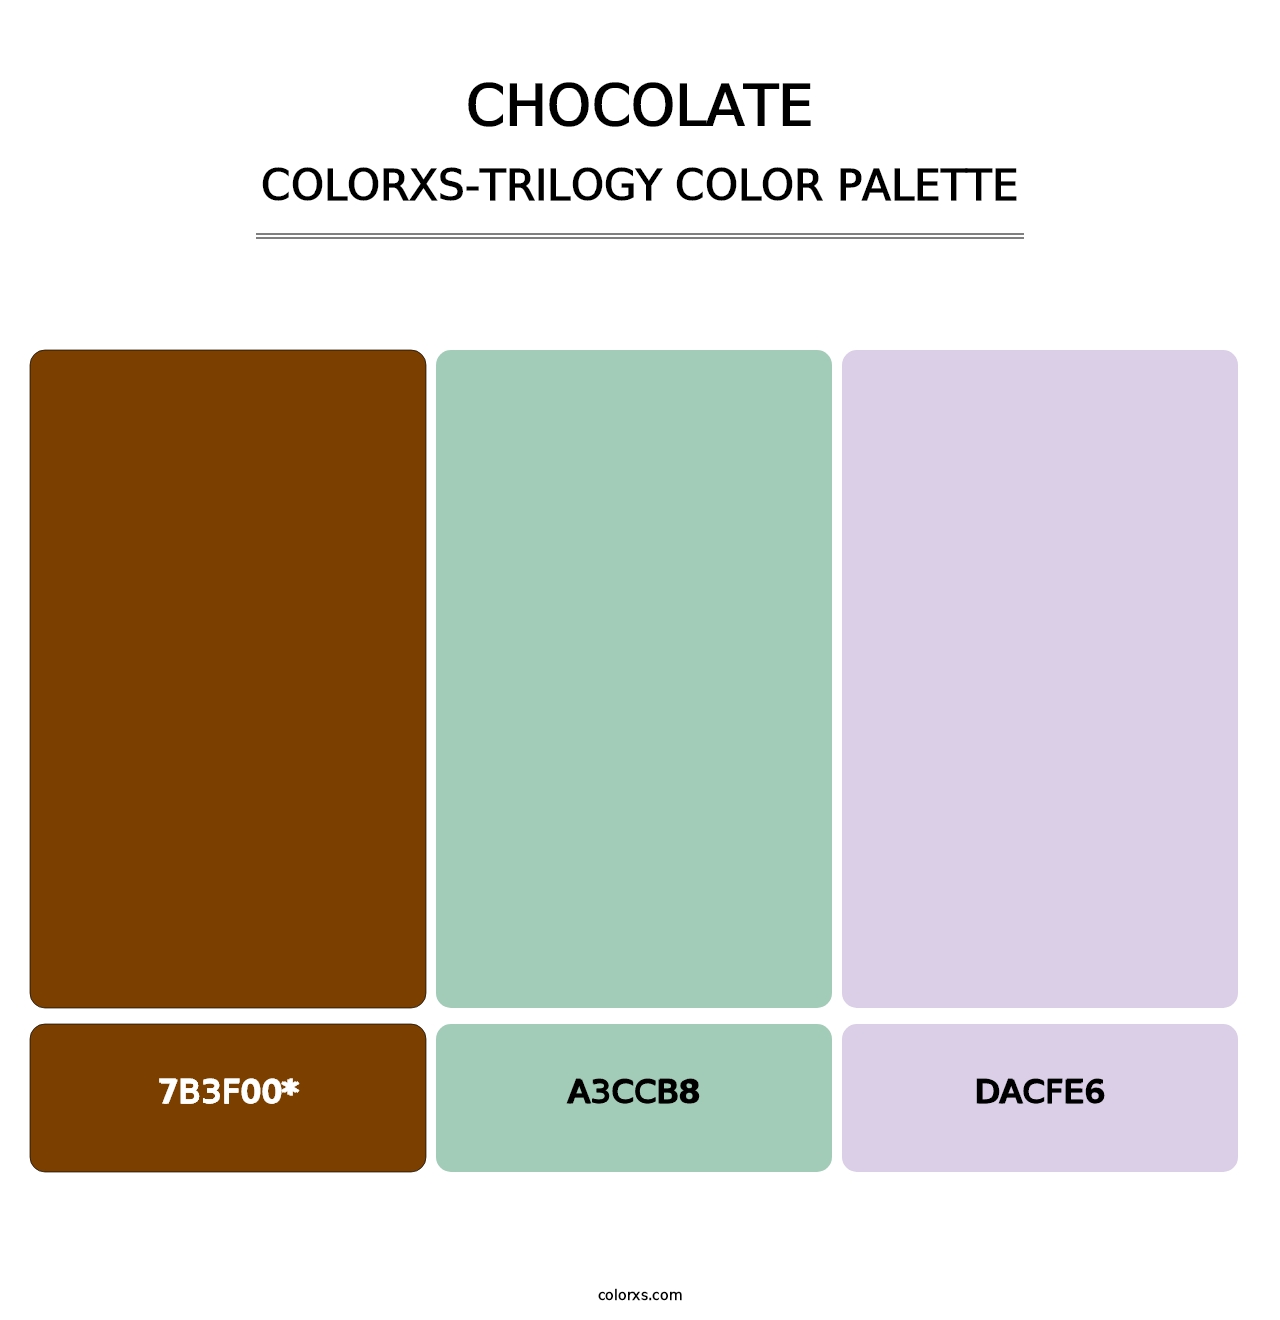 Chocolate - Colorxs Trilogy Palette